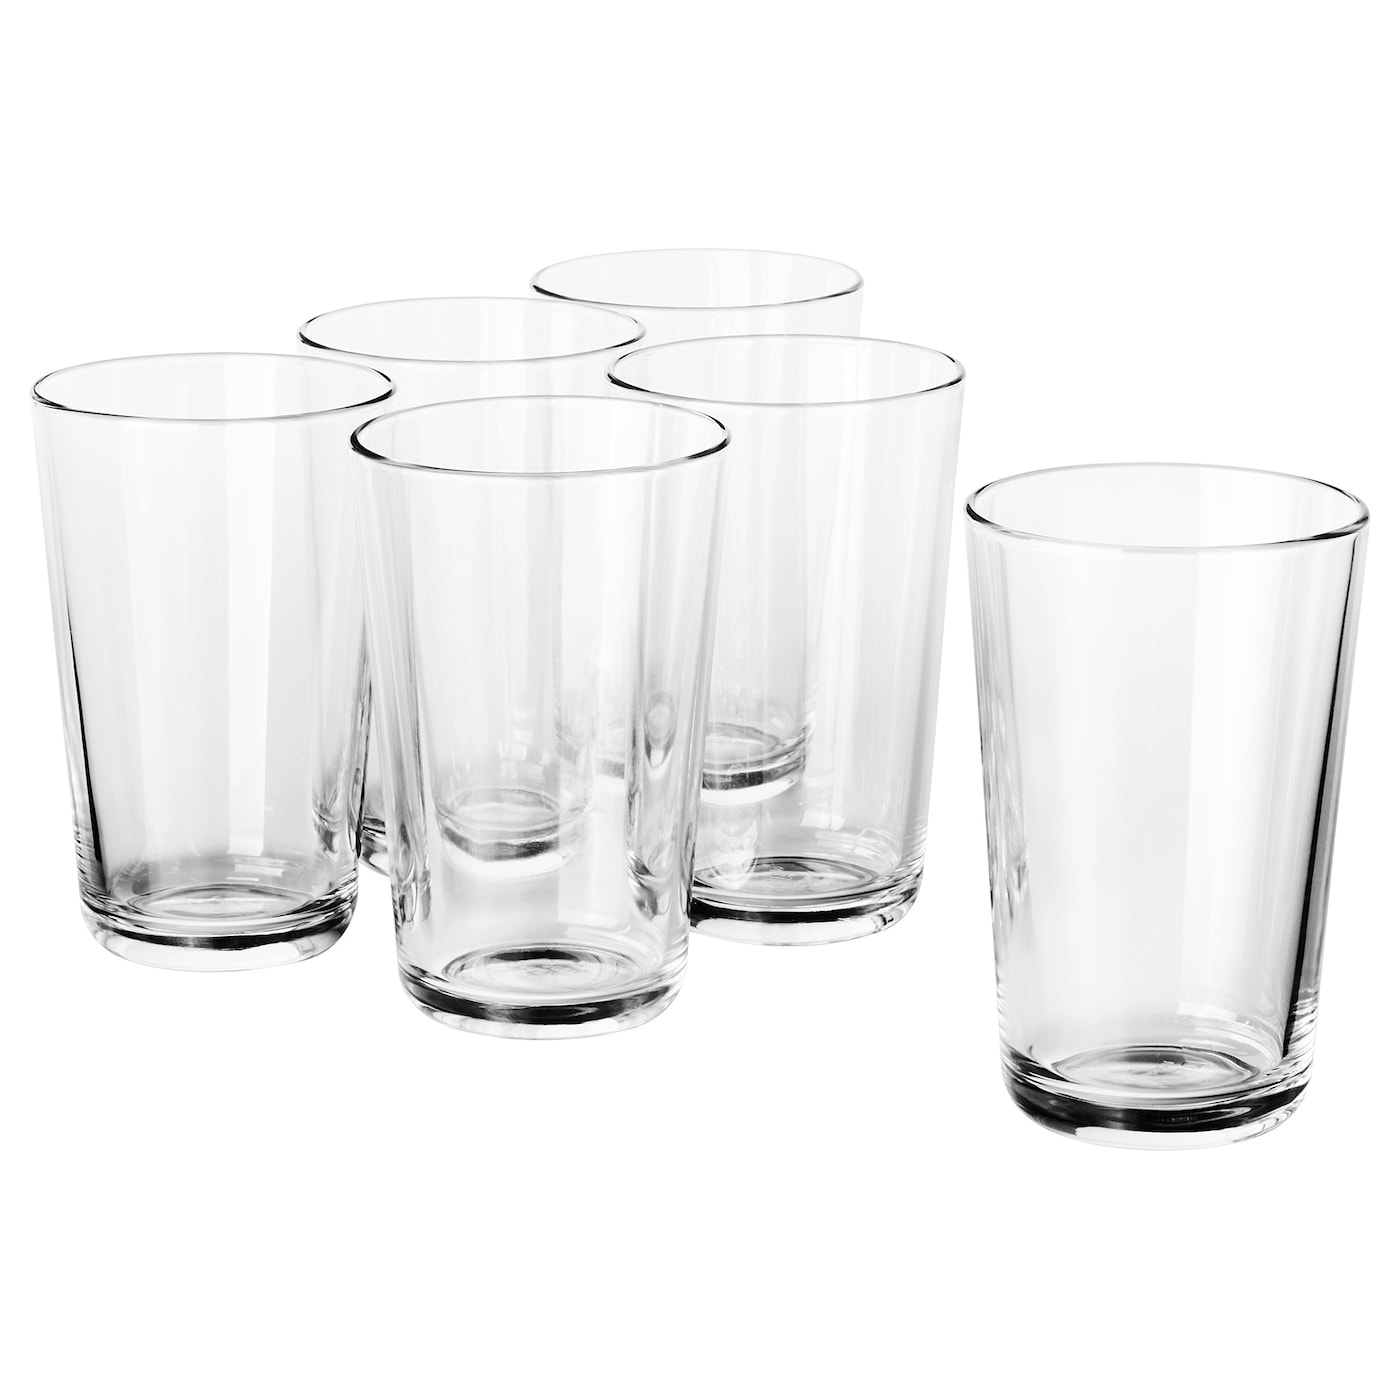 Набор стаканов, 6 шт. - IKEA 365+, 450 мл, прозрачное стекло, ИКЕА 365+